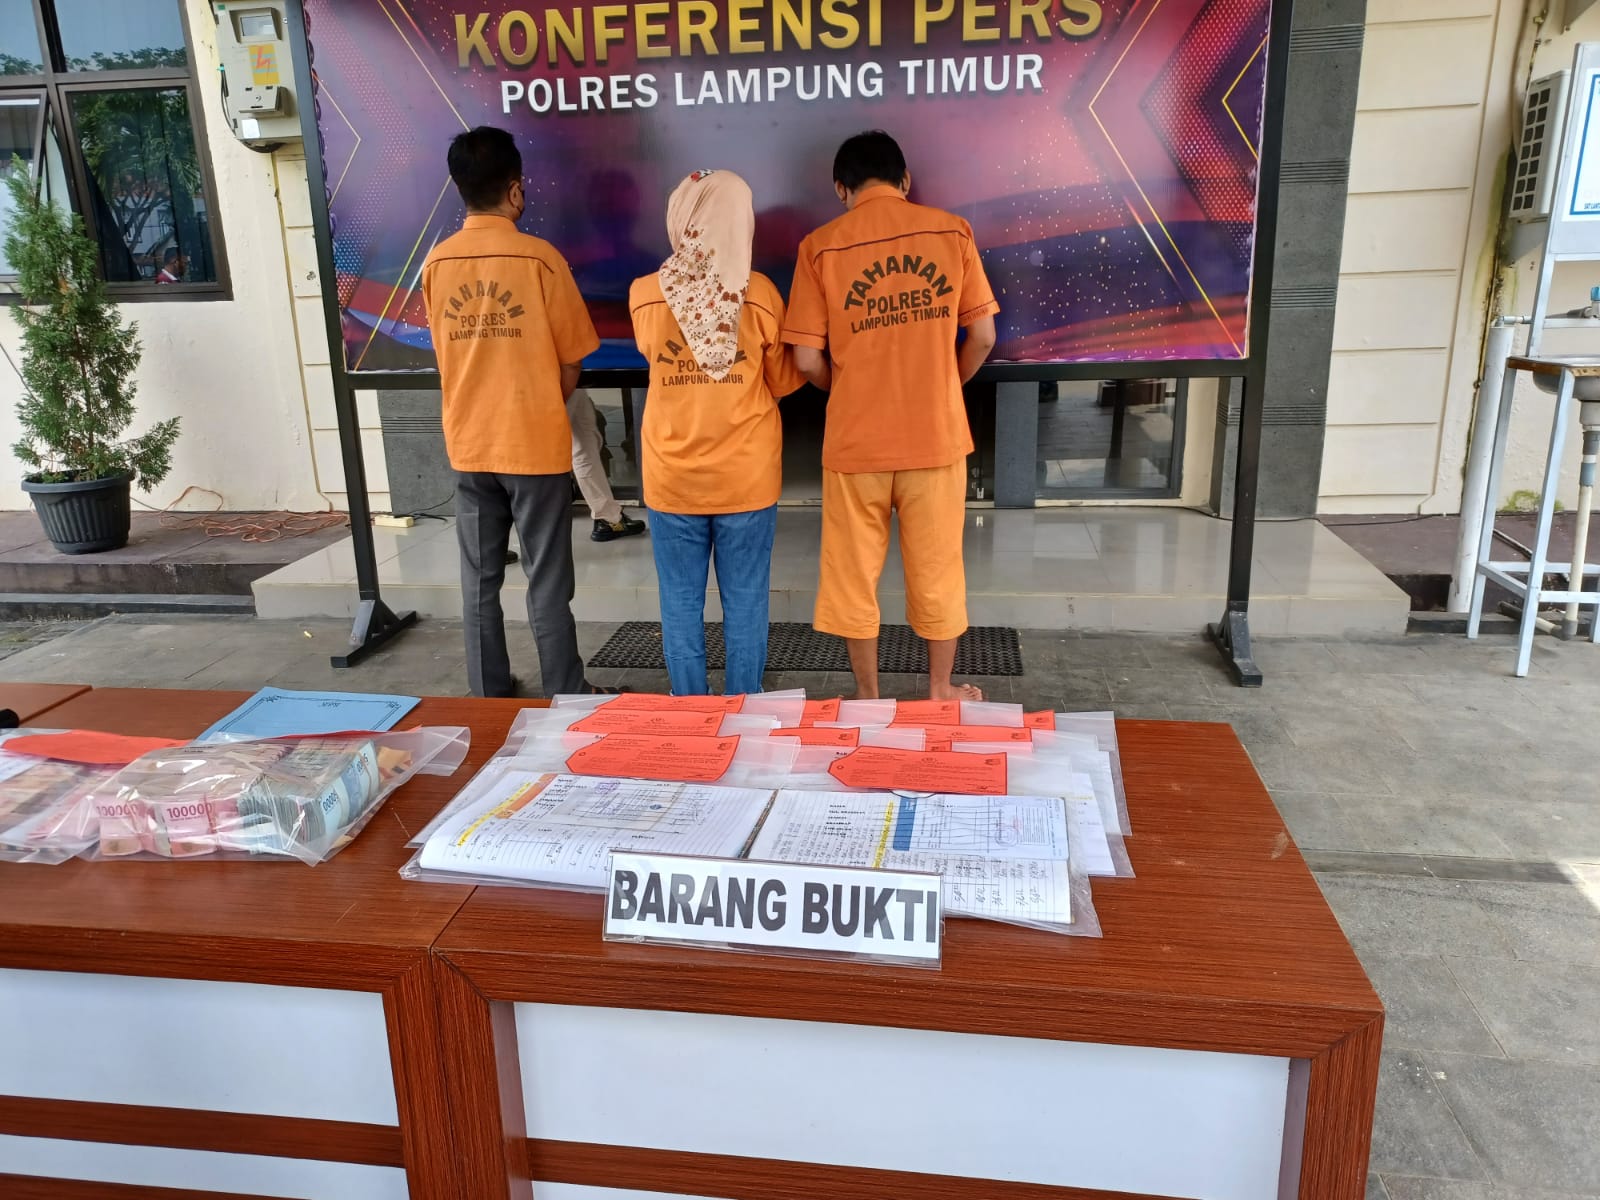 Tersangkut Kasus Korupsi, Anggota DPRD Lampung Timur Masih Dapat Hak Ini...